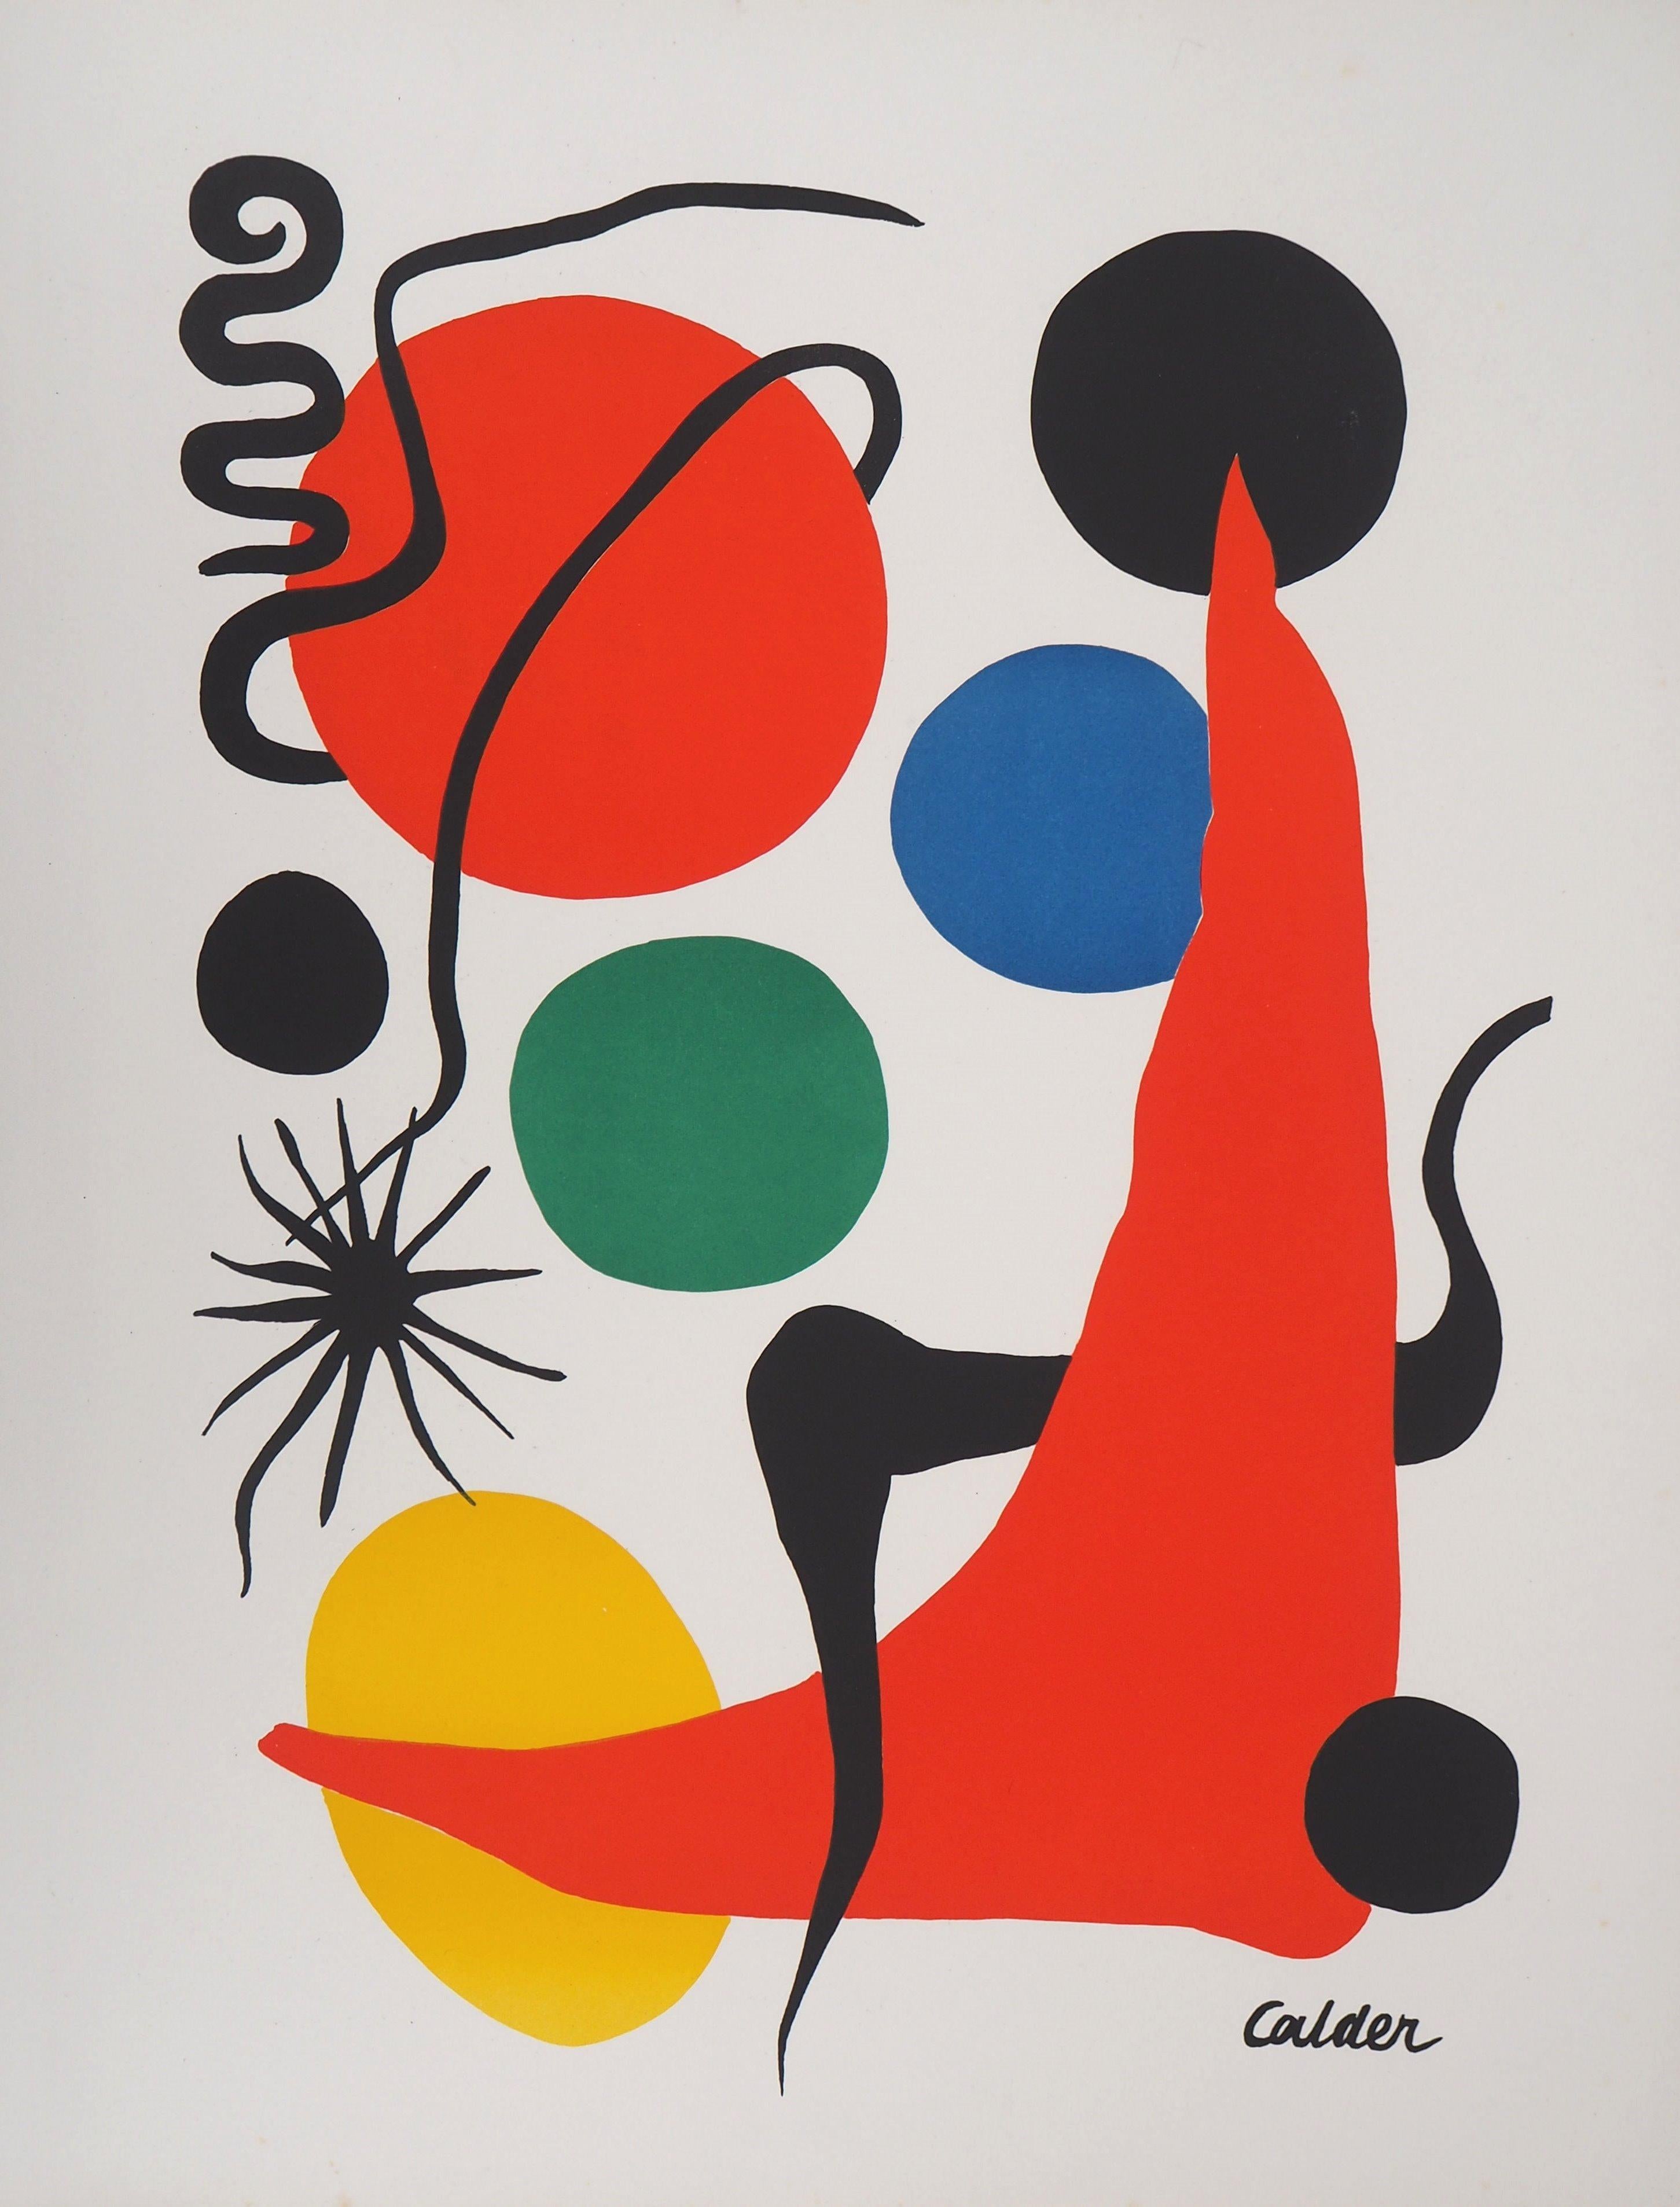 Alexander Calder Abstract Print - Circles and triangle - Original signed lithograph